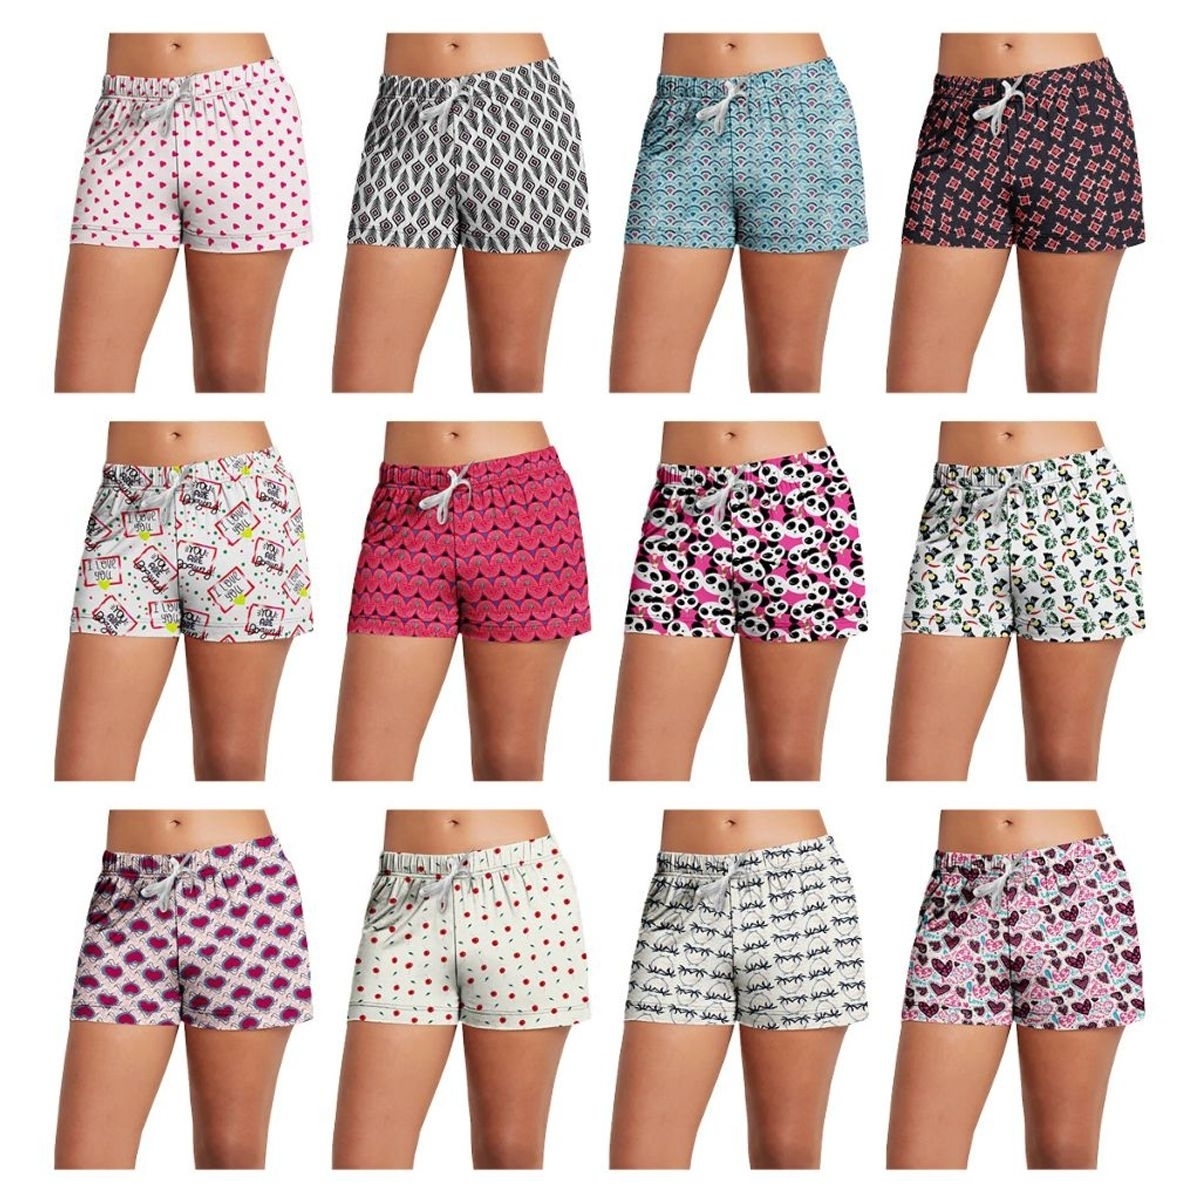 Multi-Pack: Women's Super-Soft Lightweight Fun Printed Comfy Lounge Bottom Pajama Shorts W/ Drawstring - 1-pack, Large, Animal